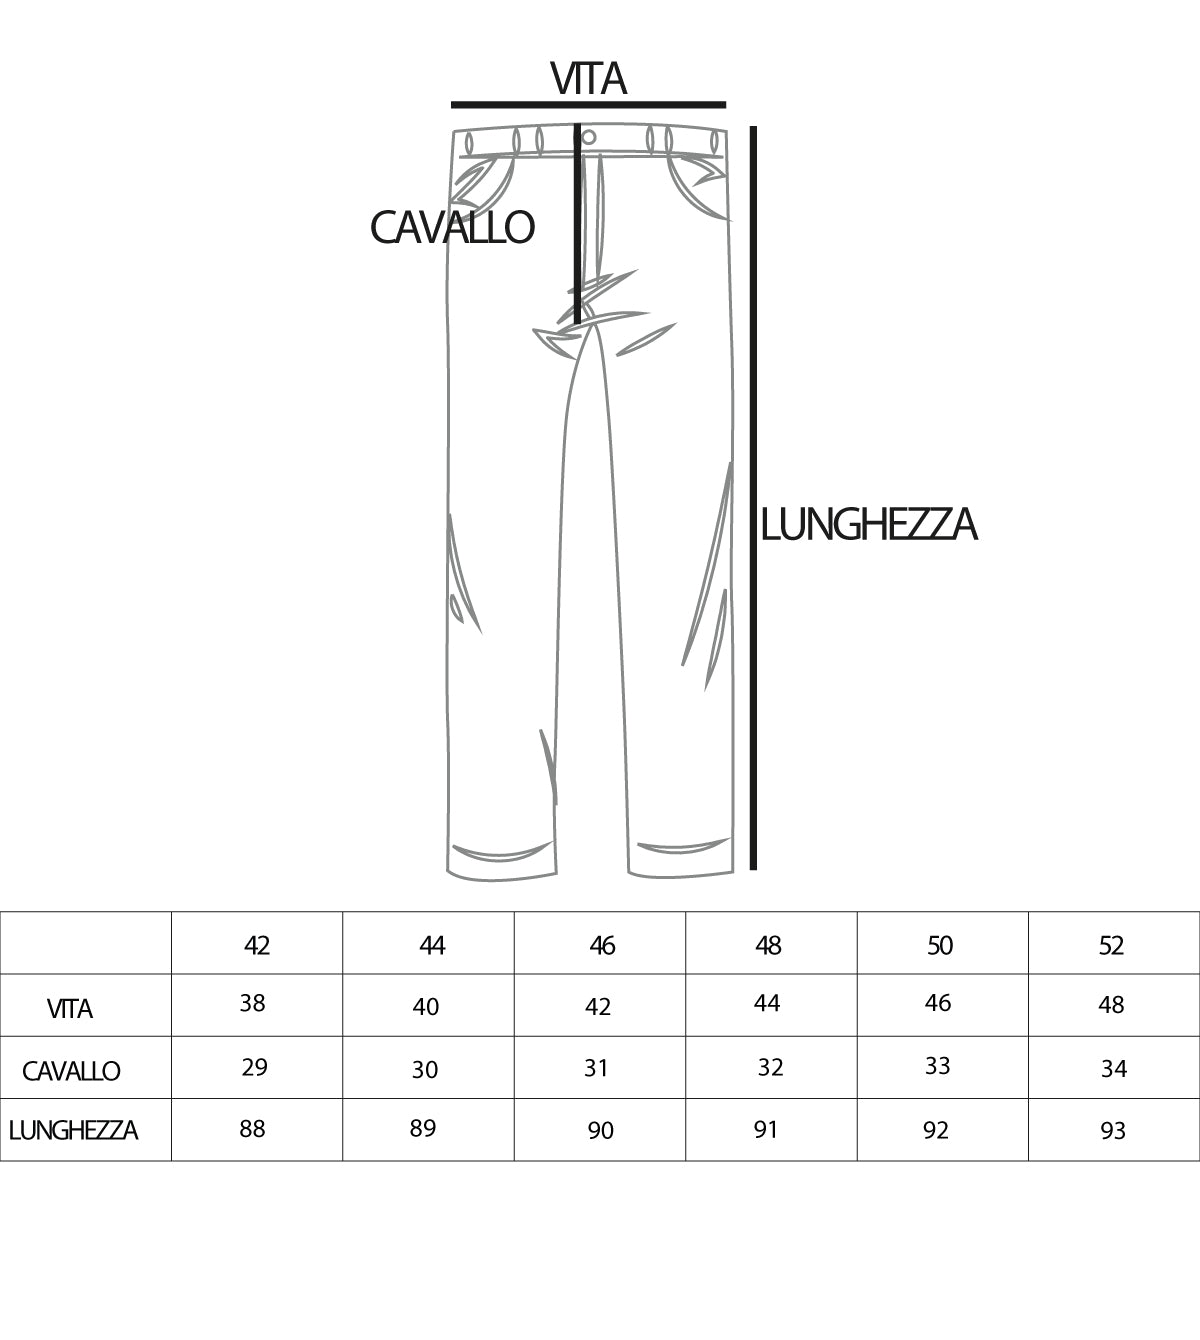 Pantaloni Jeans Uomo A Zampa Denim Nero Stone Washed Casual GIOSAL-P3661A